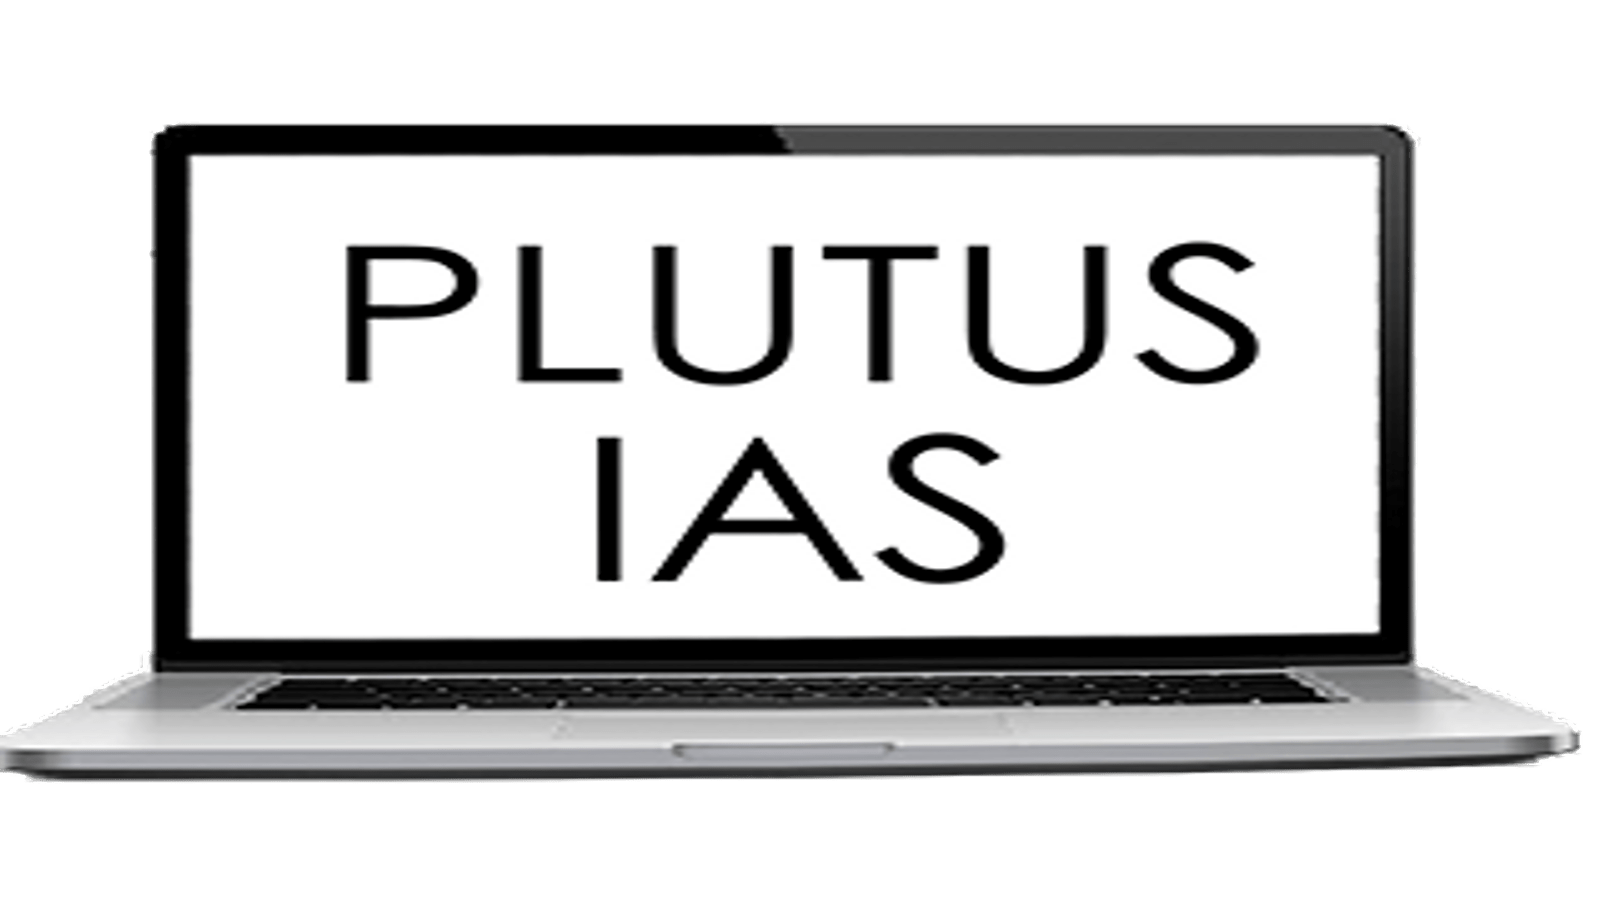 Plutus IAS Online Coaching Thiruvananthapuram